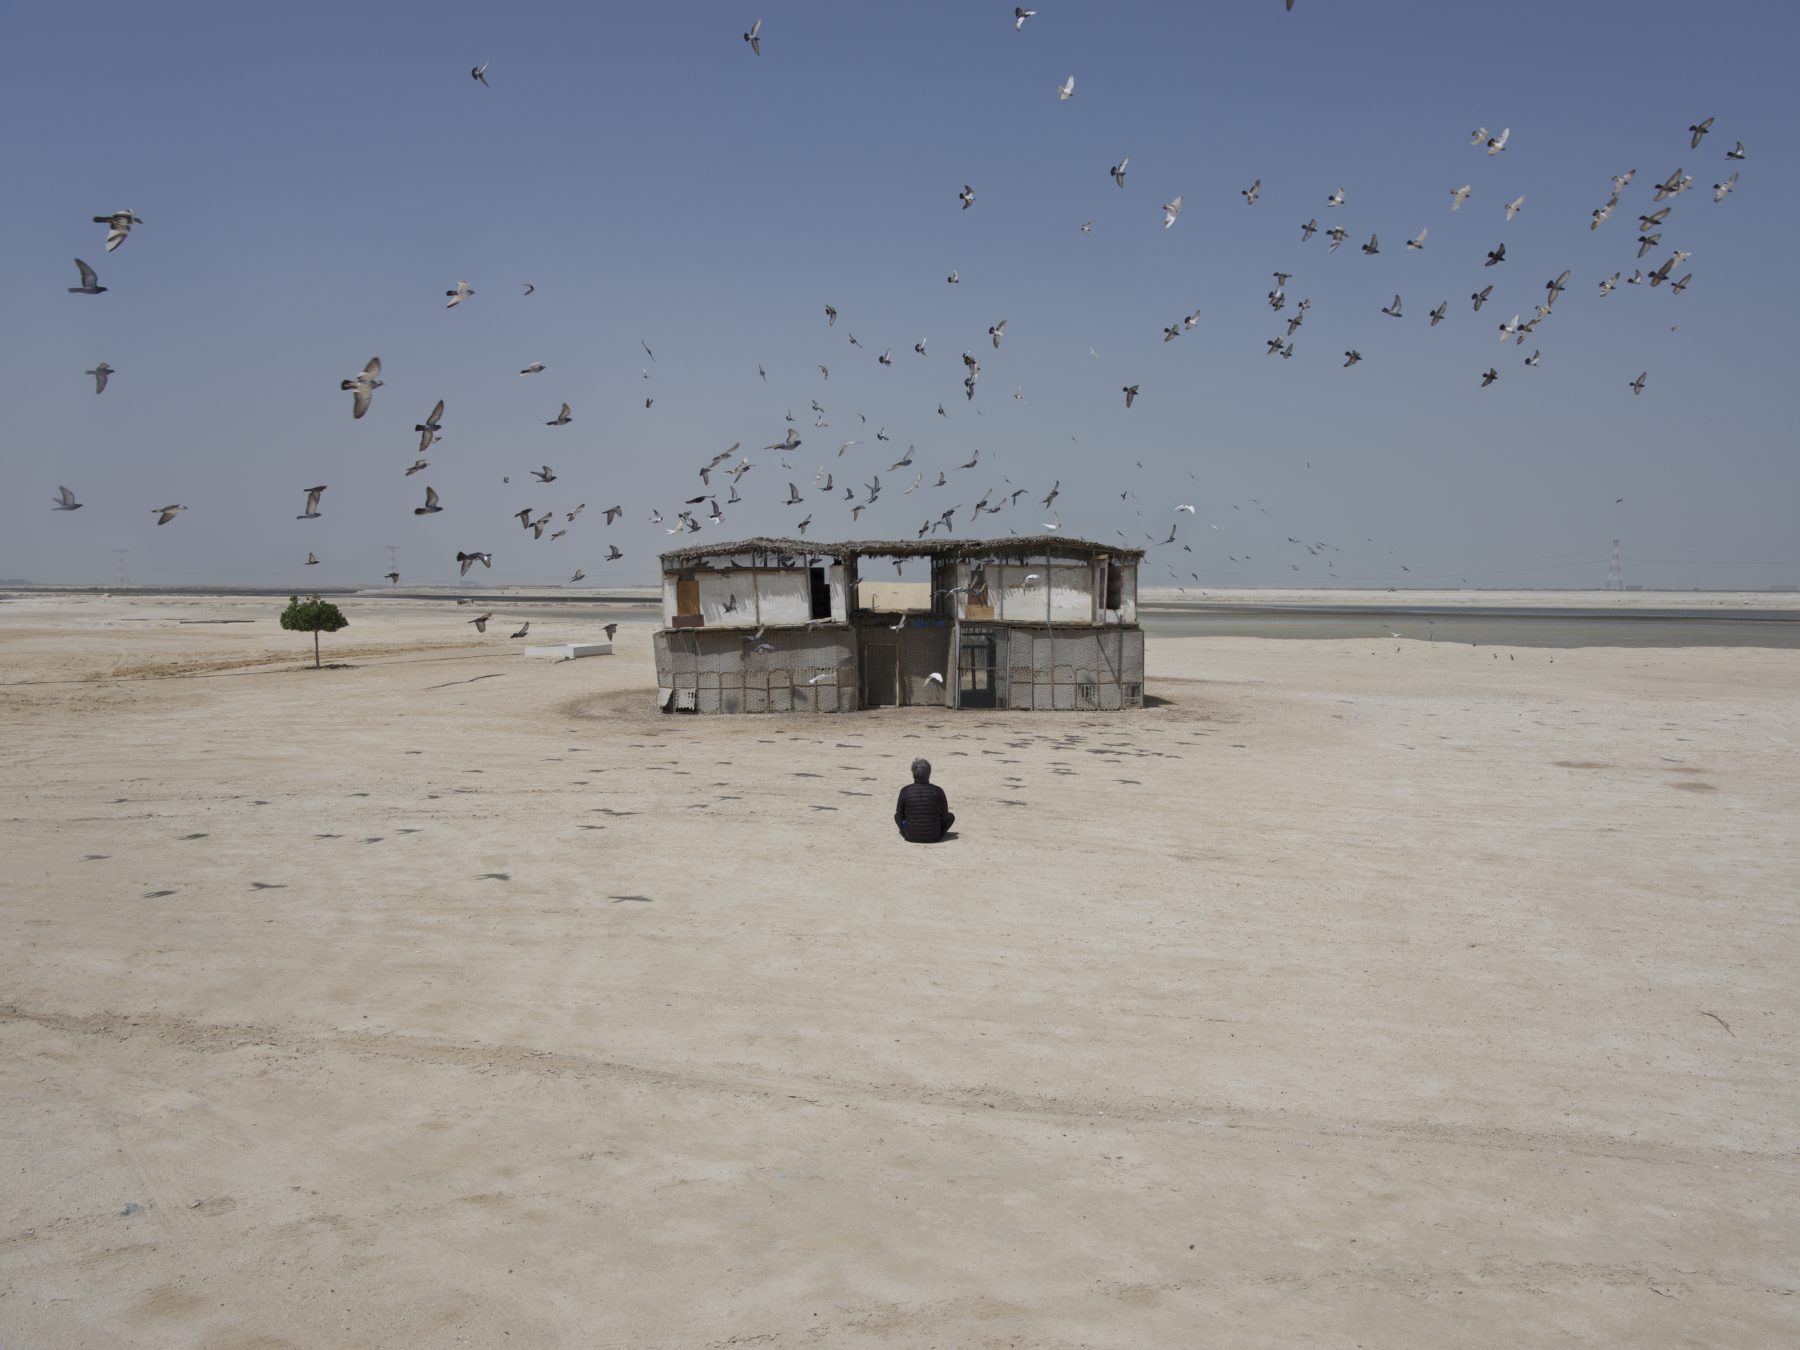 Tarek Al-Ghoussein, 'Abu Dhabi Archipelago (Jubabibat)', 2015-, Digital Print ©Courtesy of the artist and The Third Line Gallery